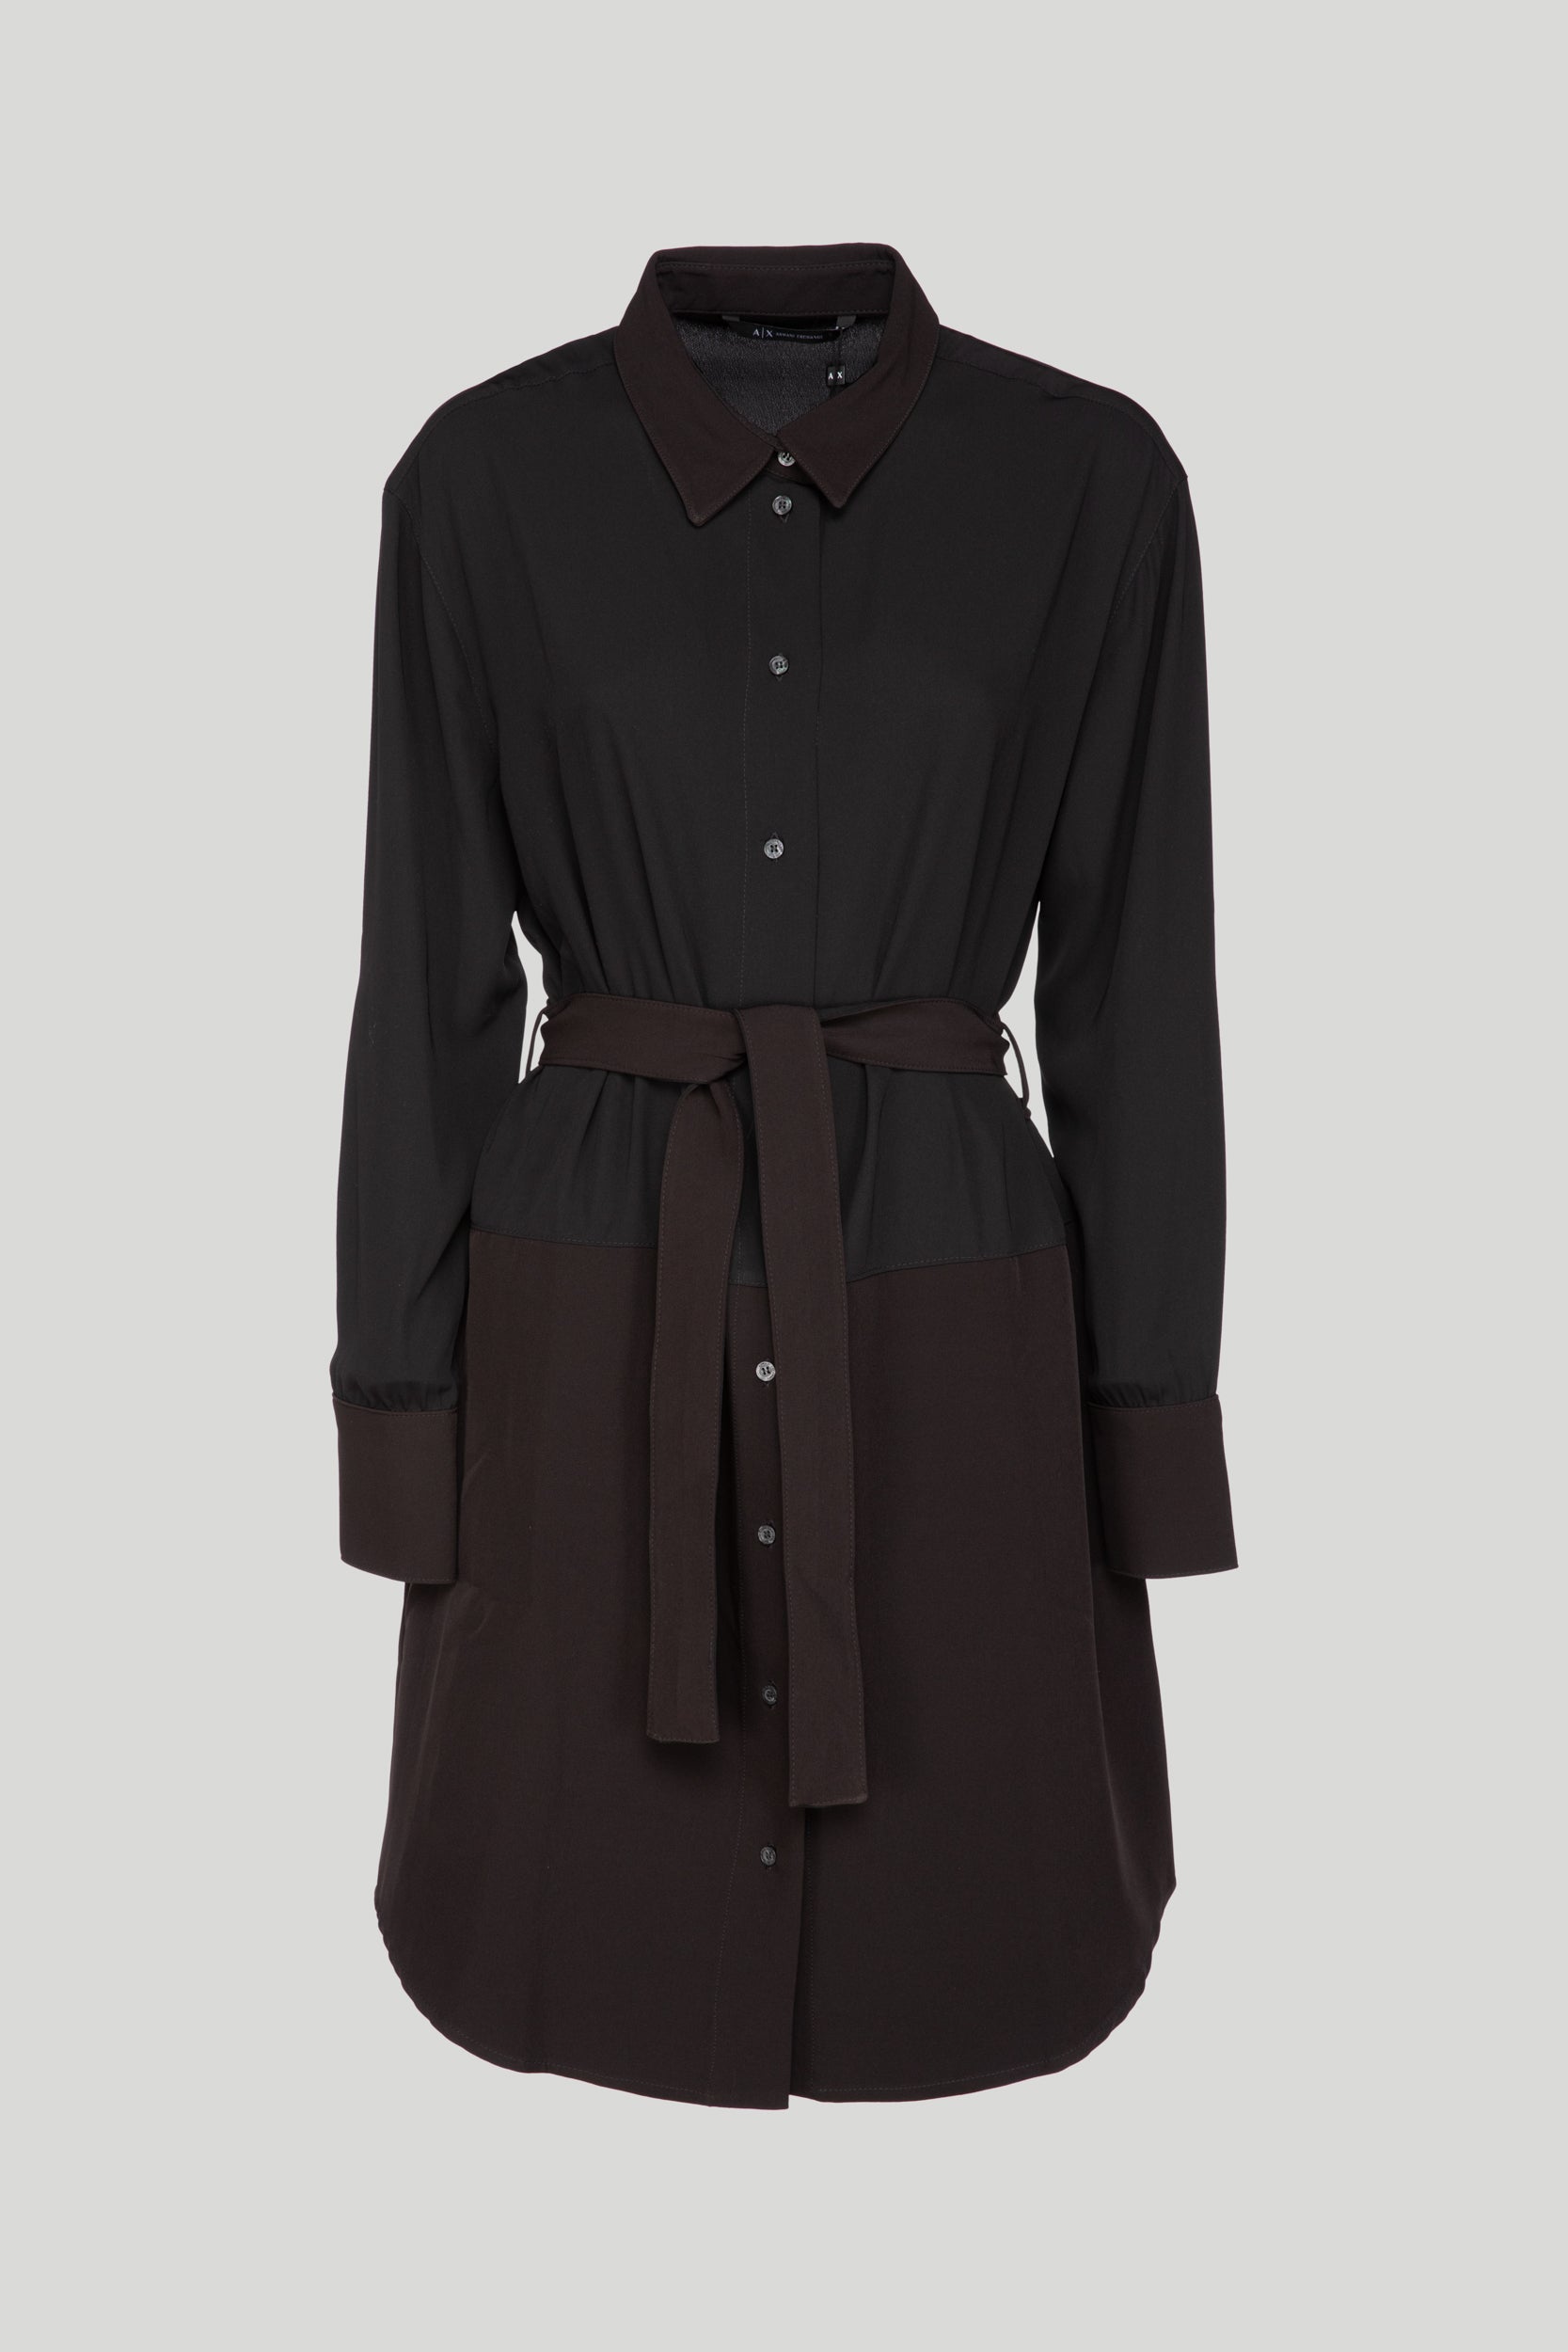 ARMANI EXCHANGE Black and Brown Shirt Dress